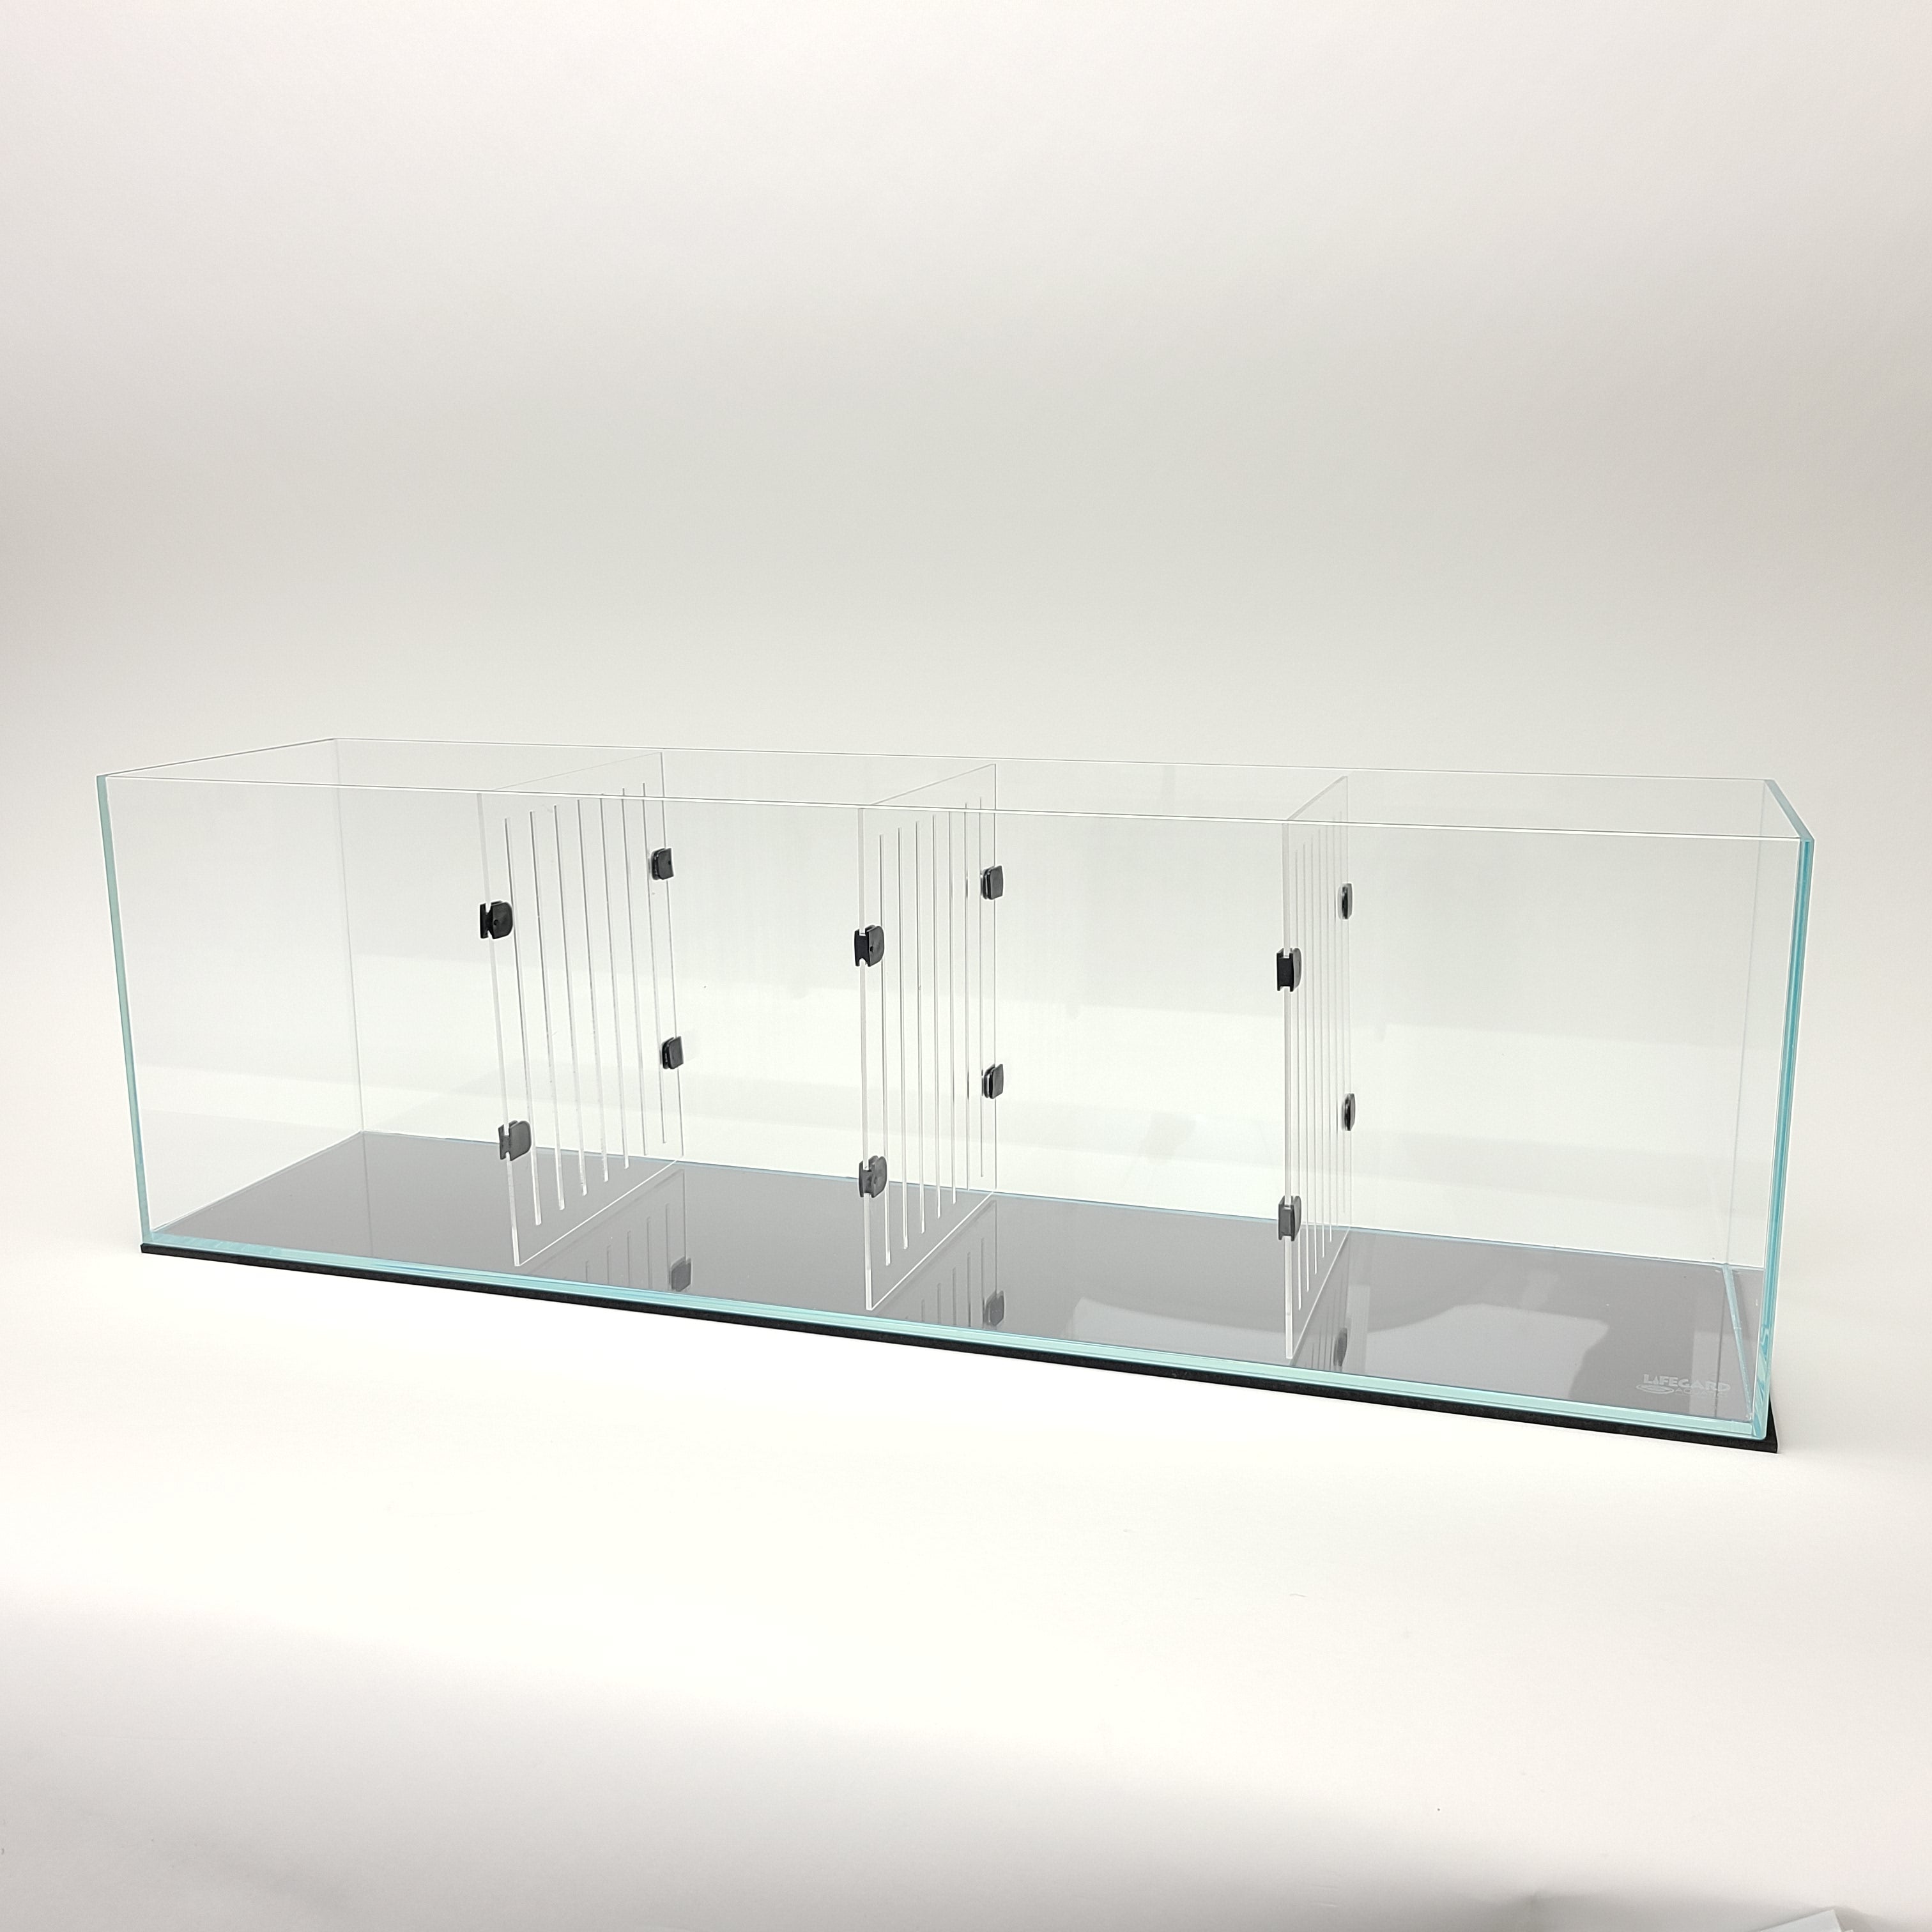 Acrylic Divider Plate for 6 Gallon Bookshelf Aquariums - CLEAR - Lifegard  Aquatics